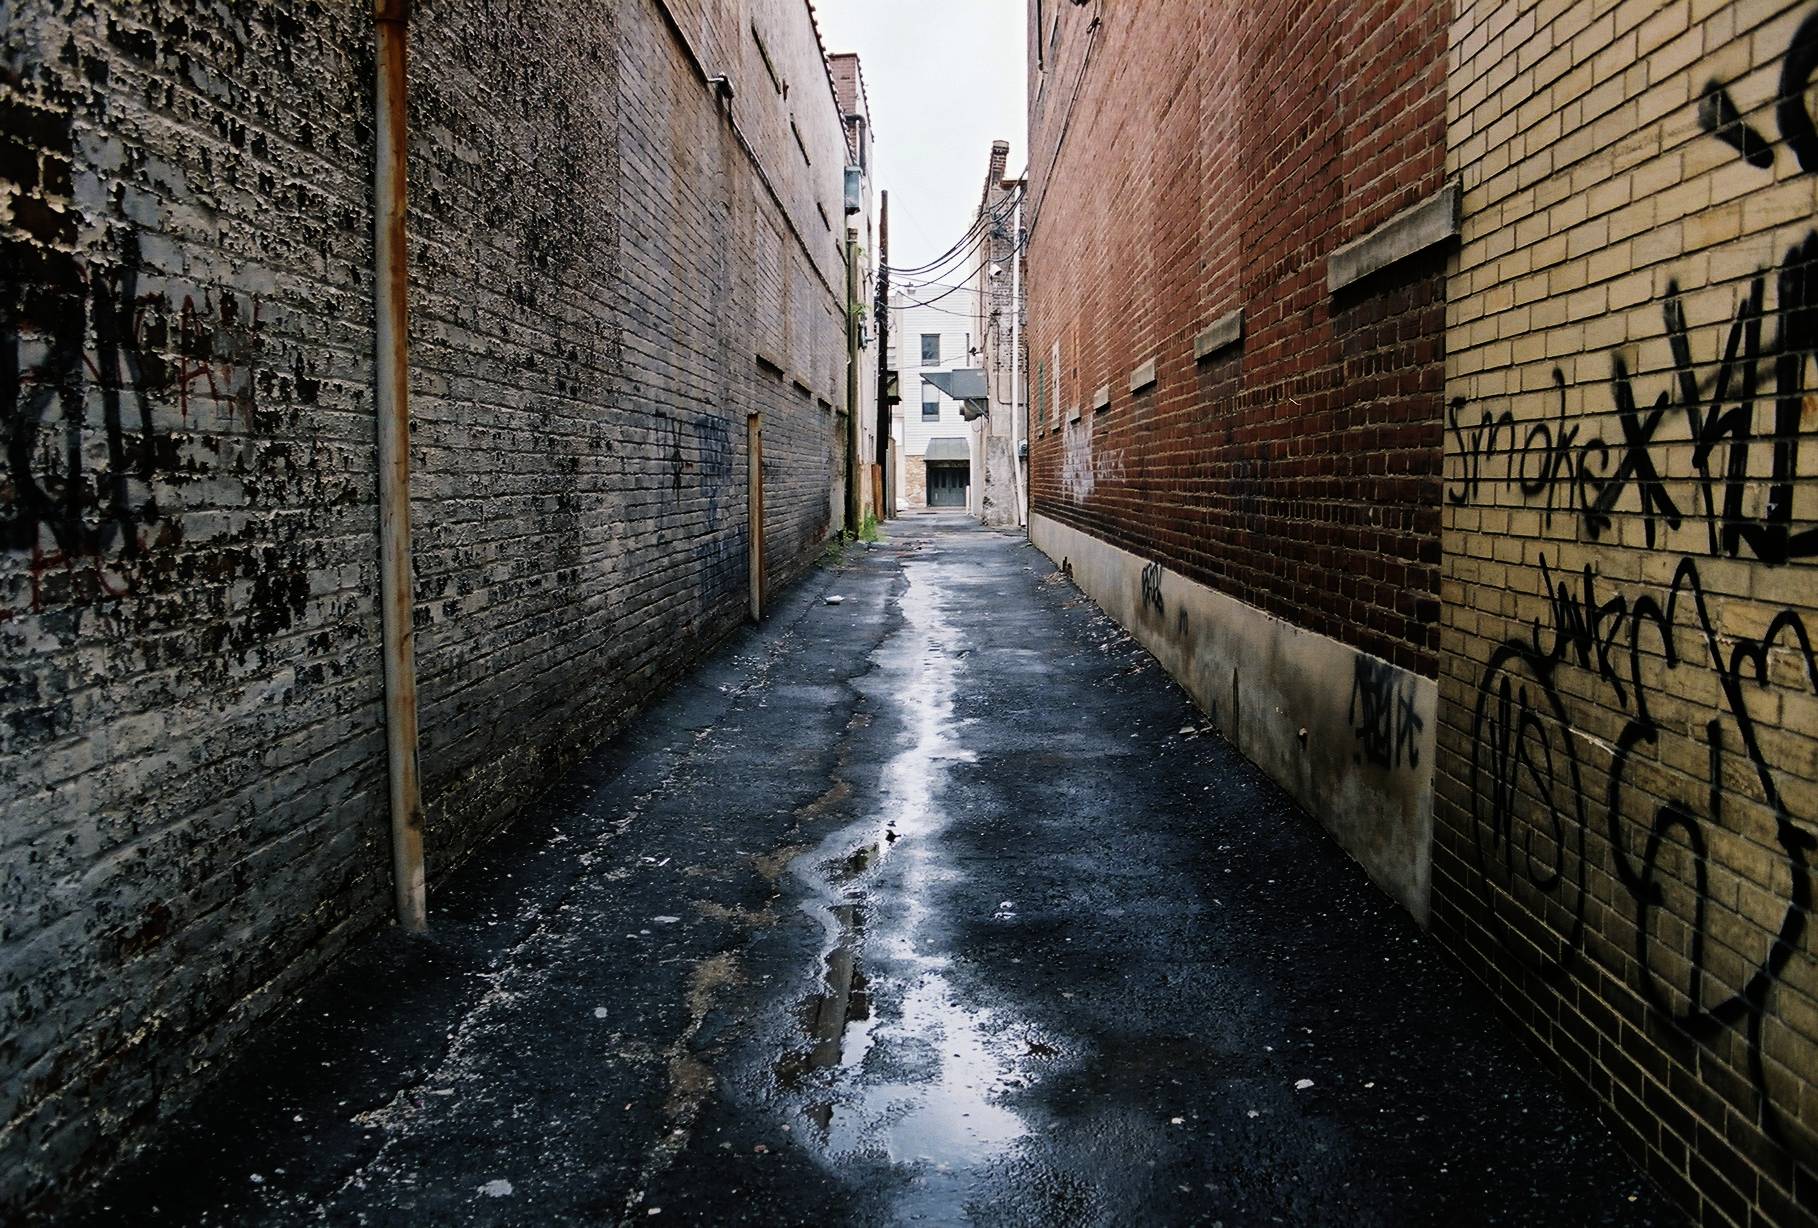 Sketchy Alleyway | Flickr - Photo Sharing!